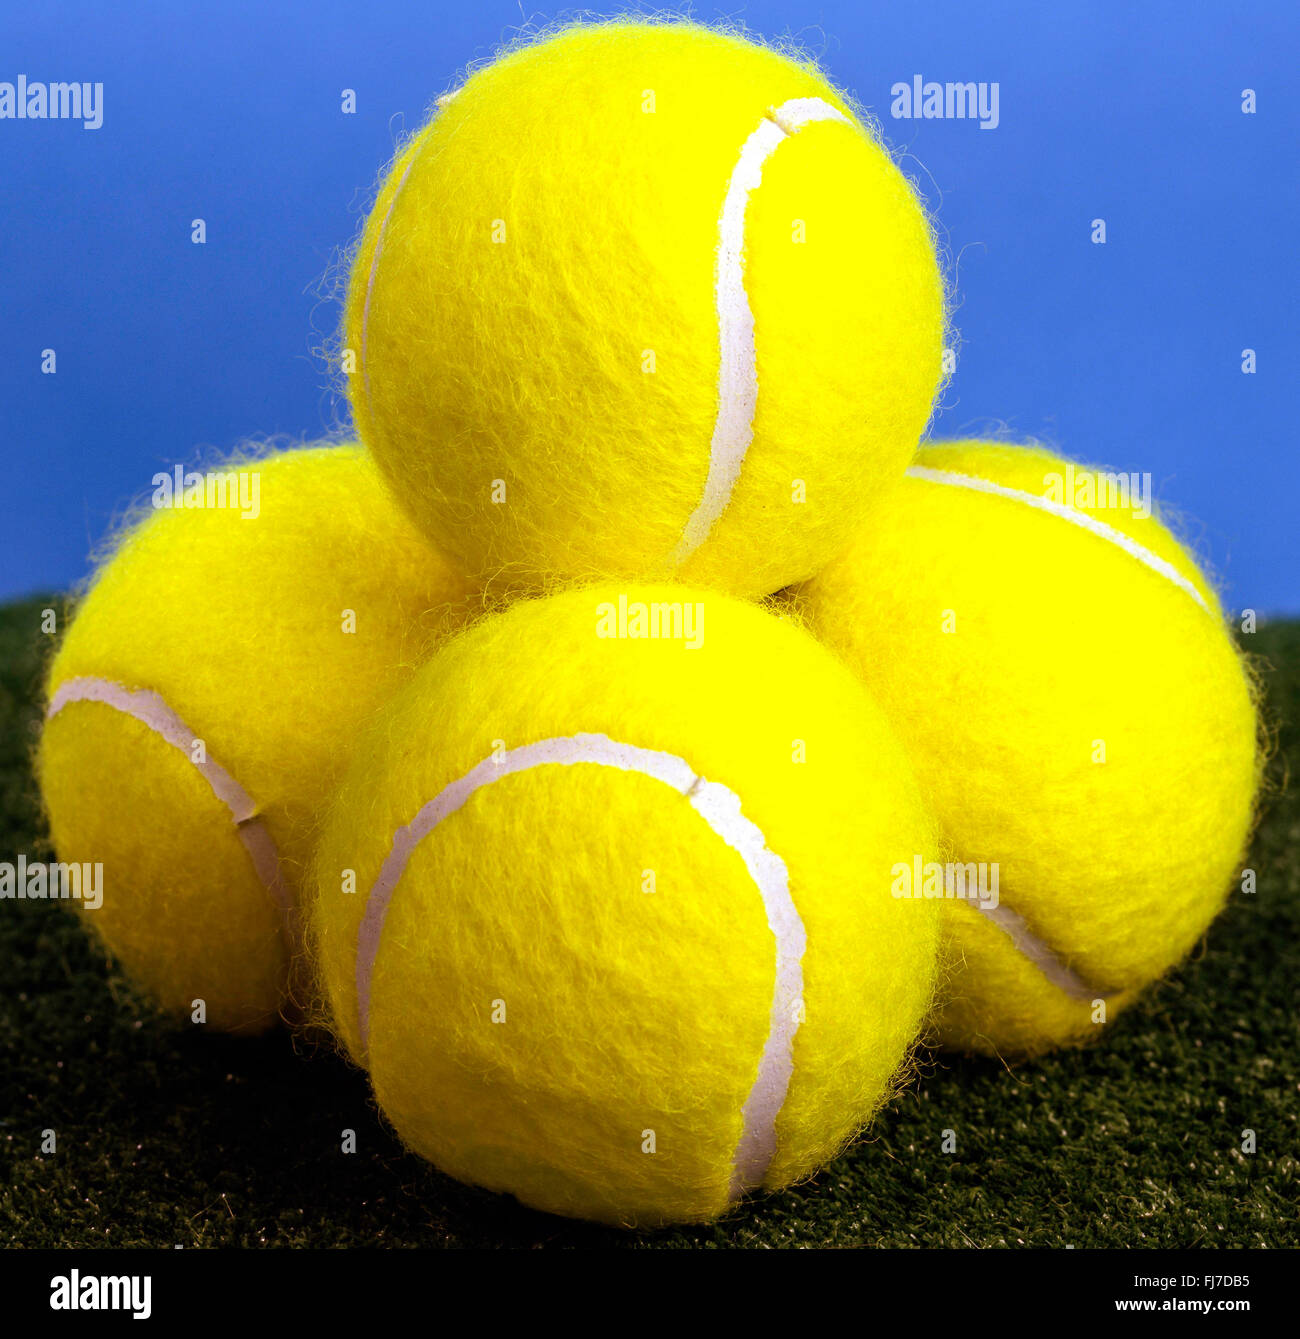 Four yellow tennis balls in studio setting, Greater London, England, United Kingdom Stock Photo